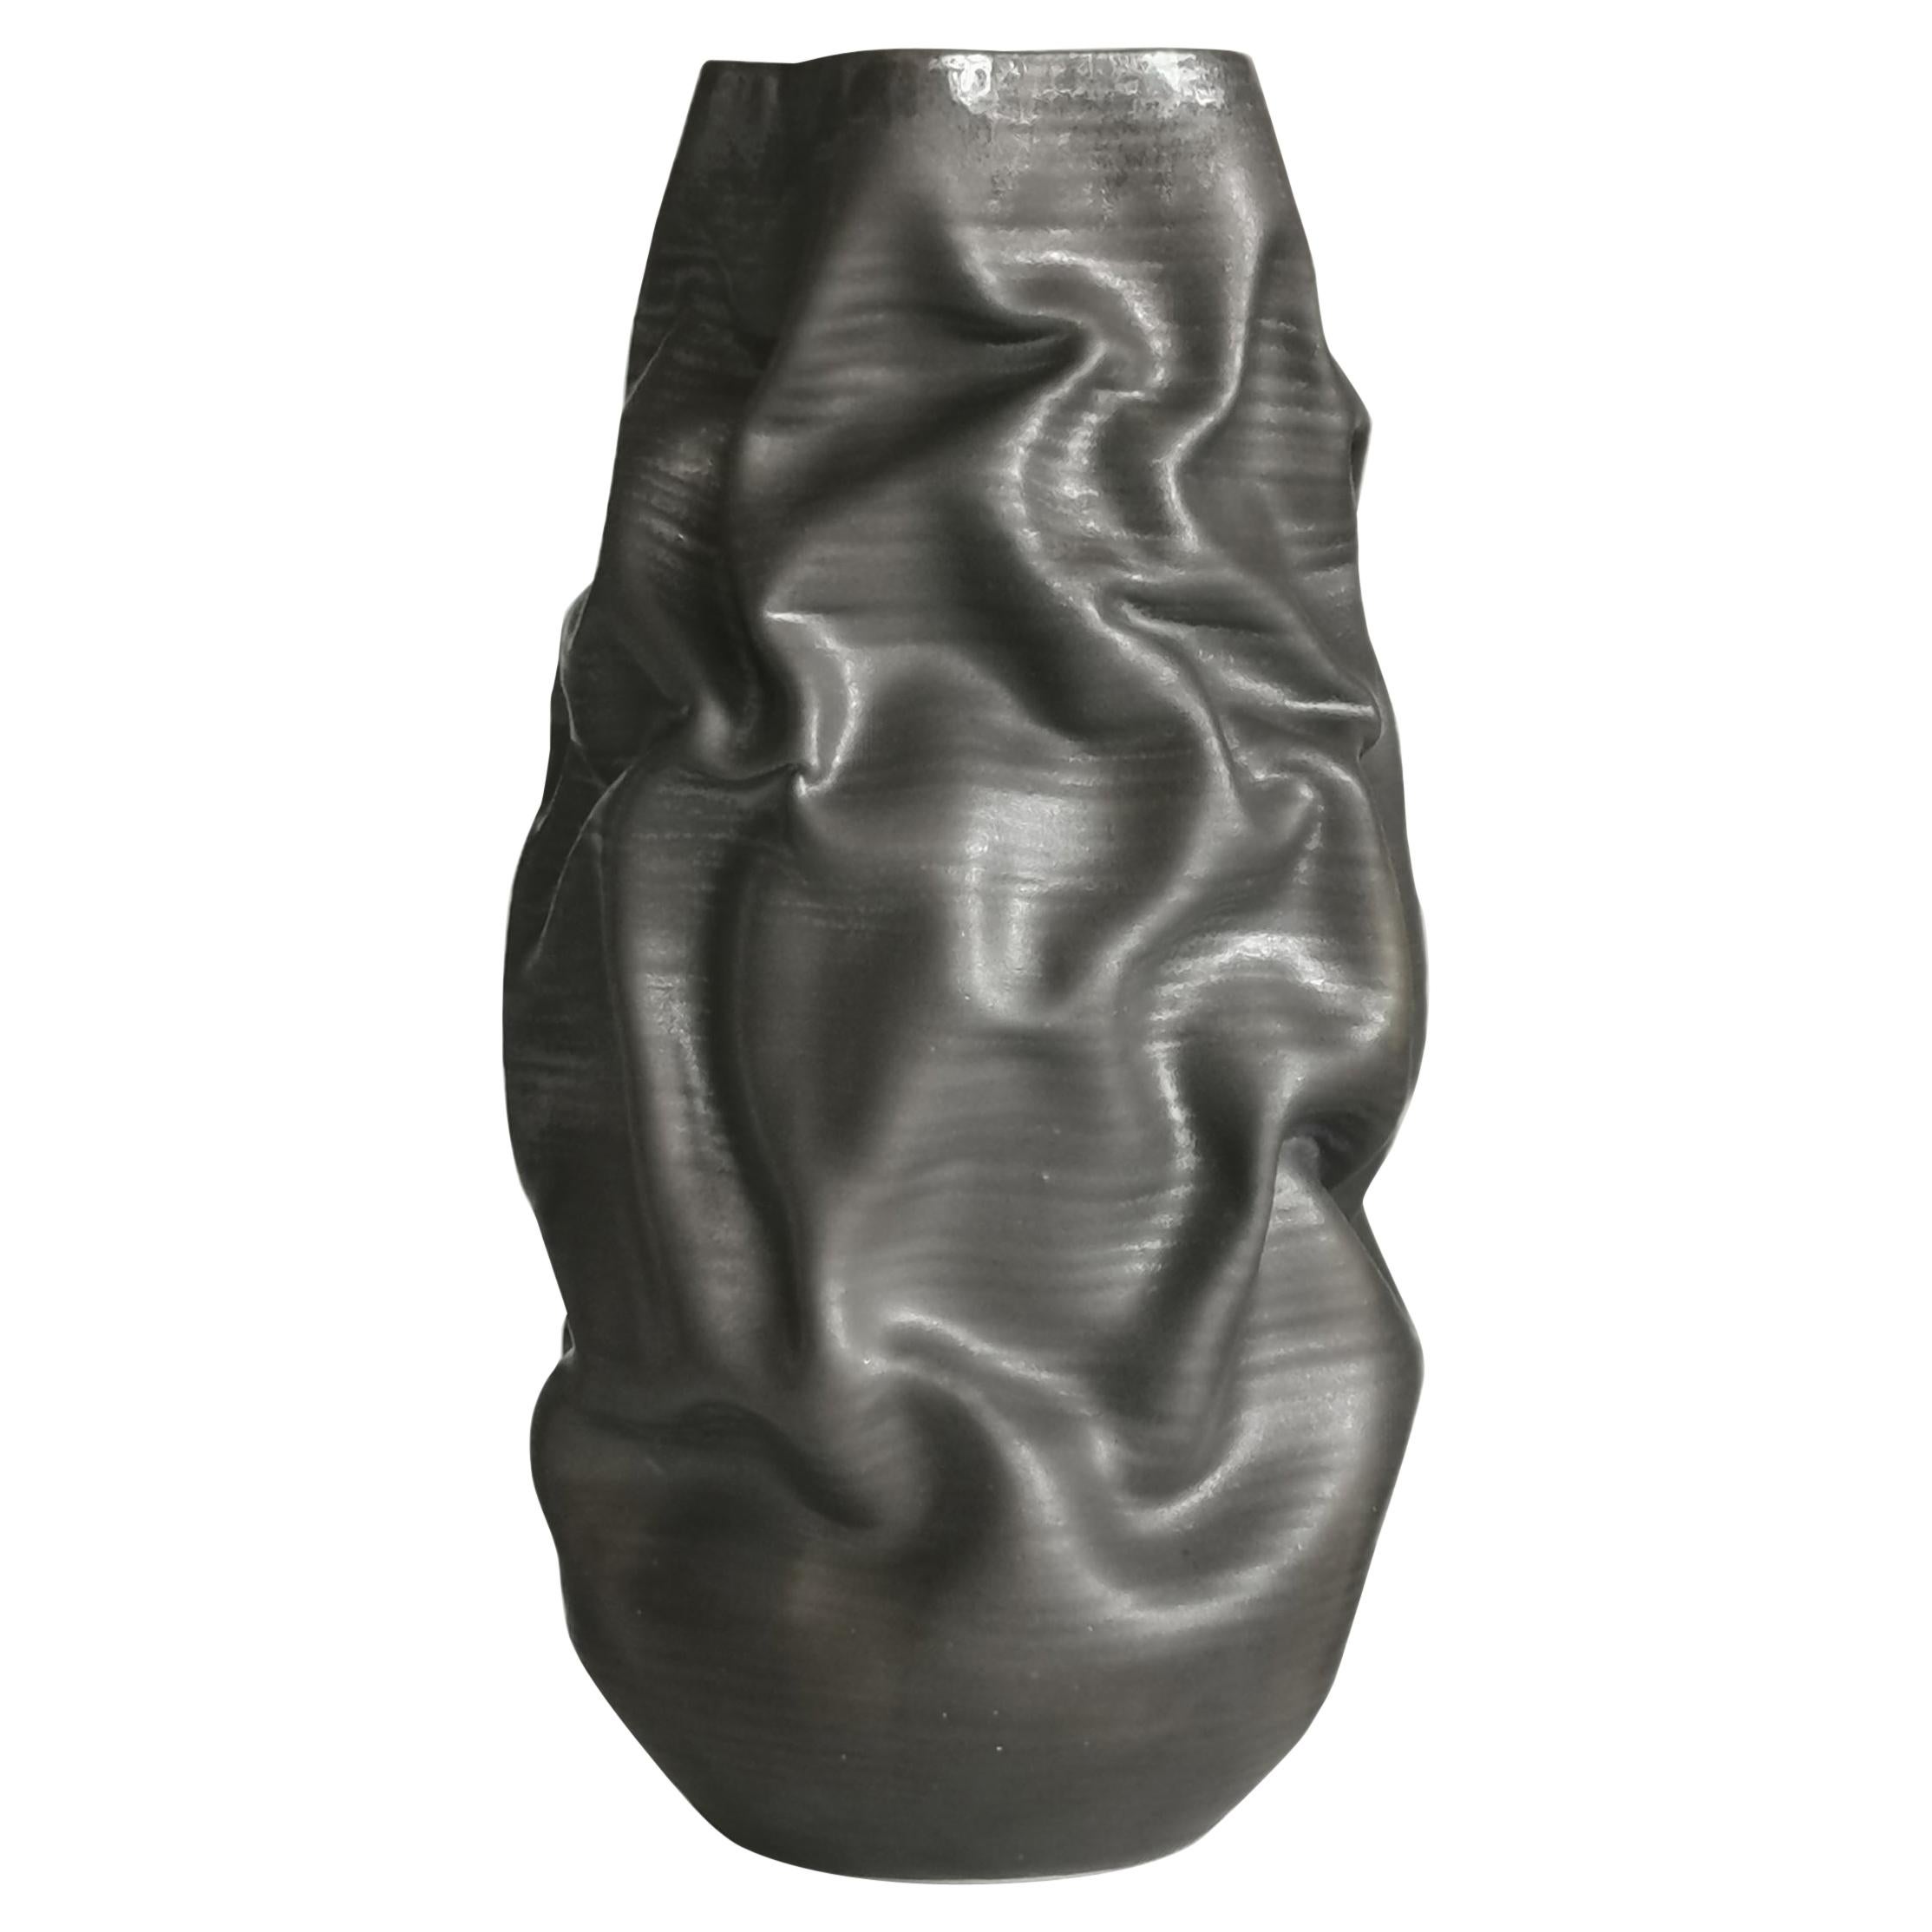 Tall Black Crumpled Form, Unique Ceramic Sculpture Vessel N.68